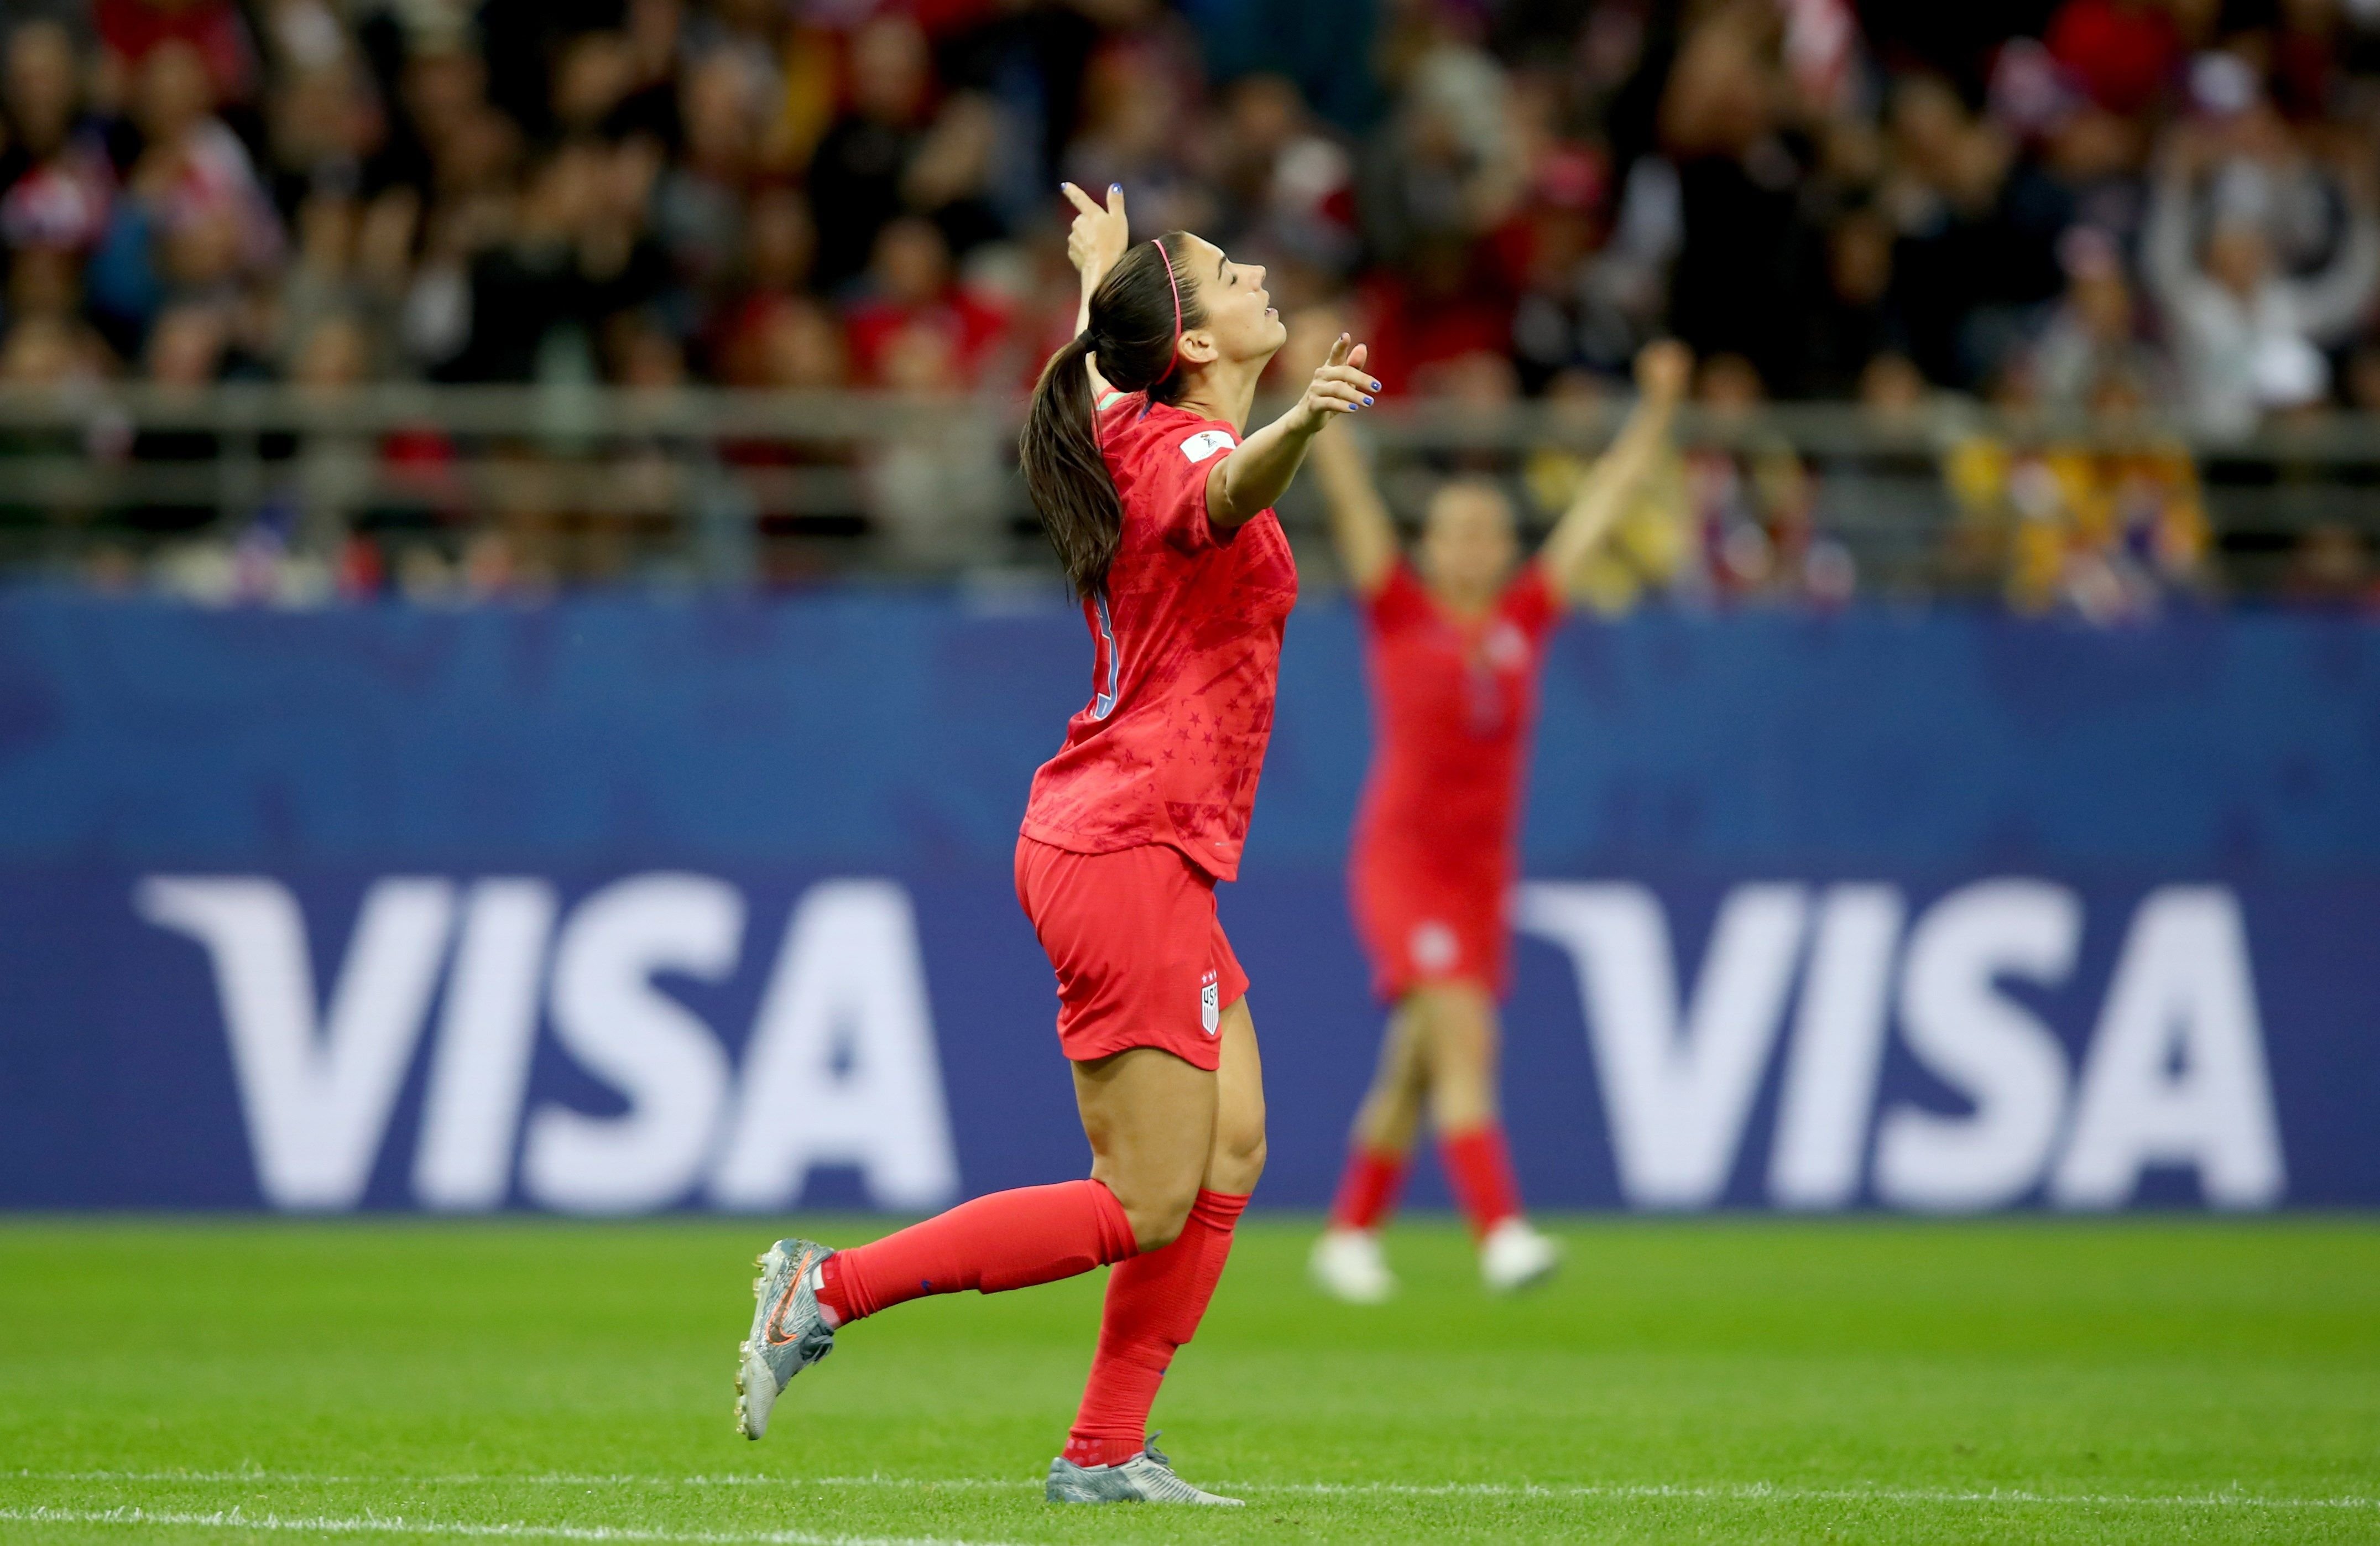 L'escandalosa bretxa salarial entre el futbol masculí i femení mundial